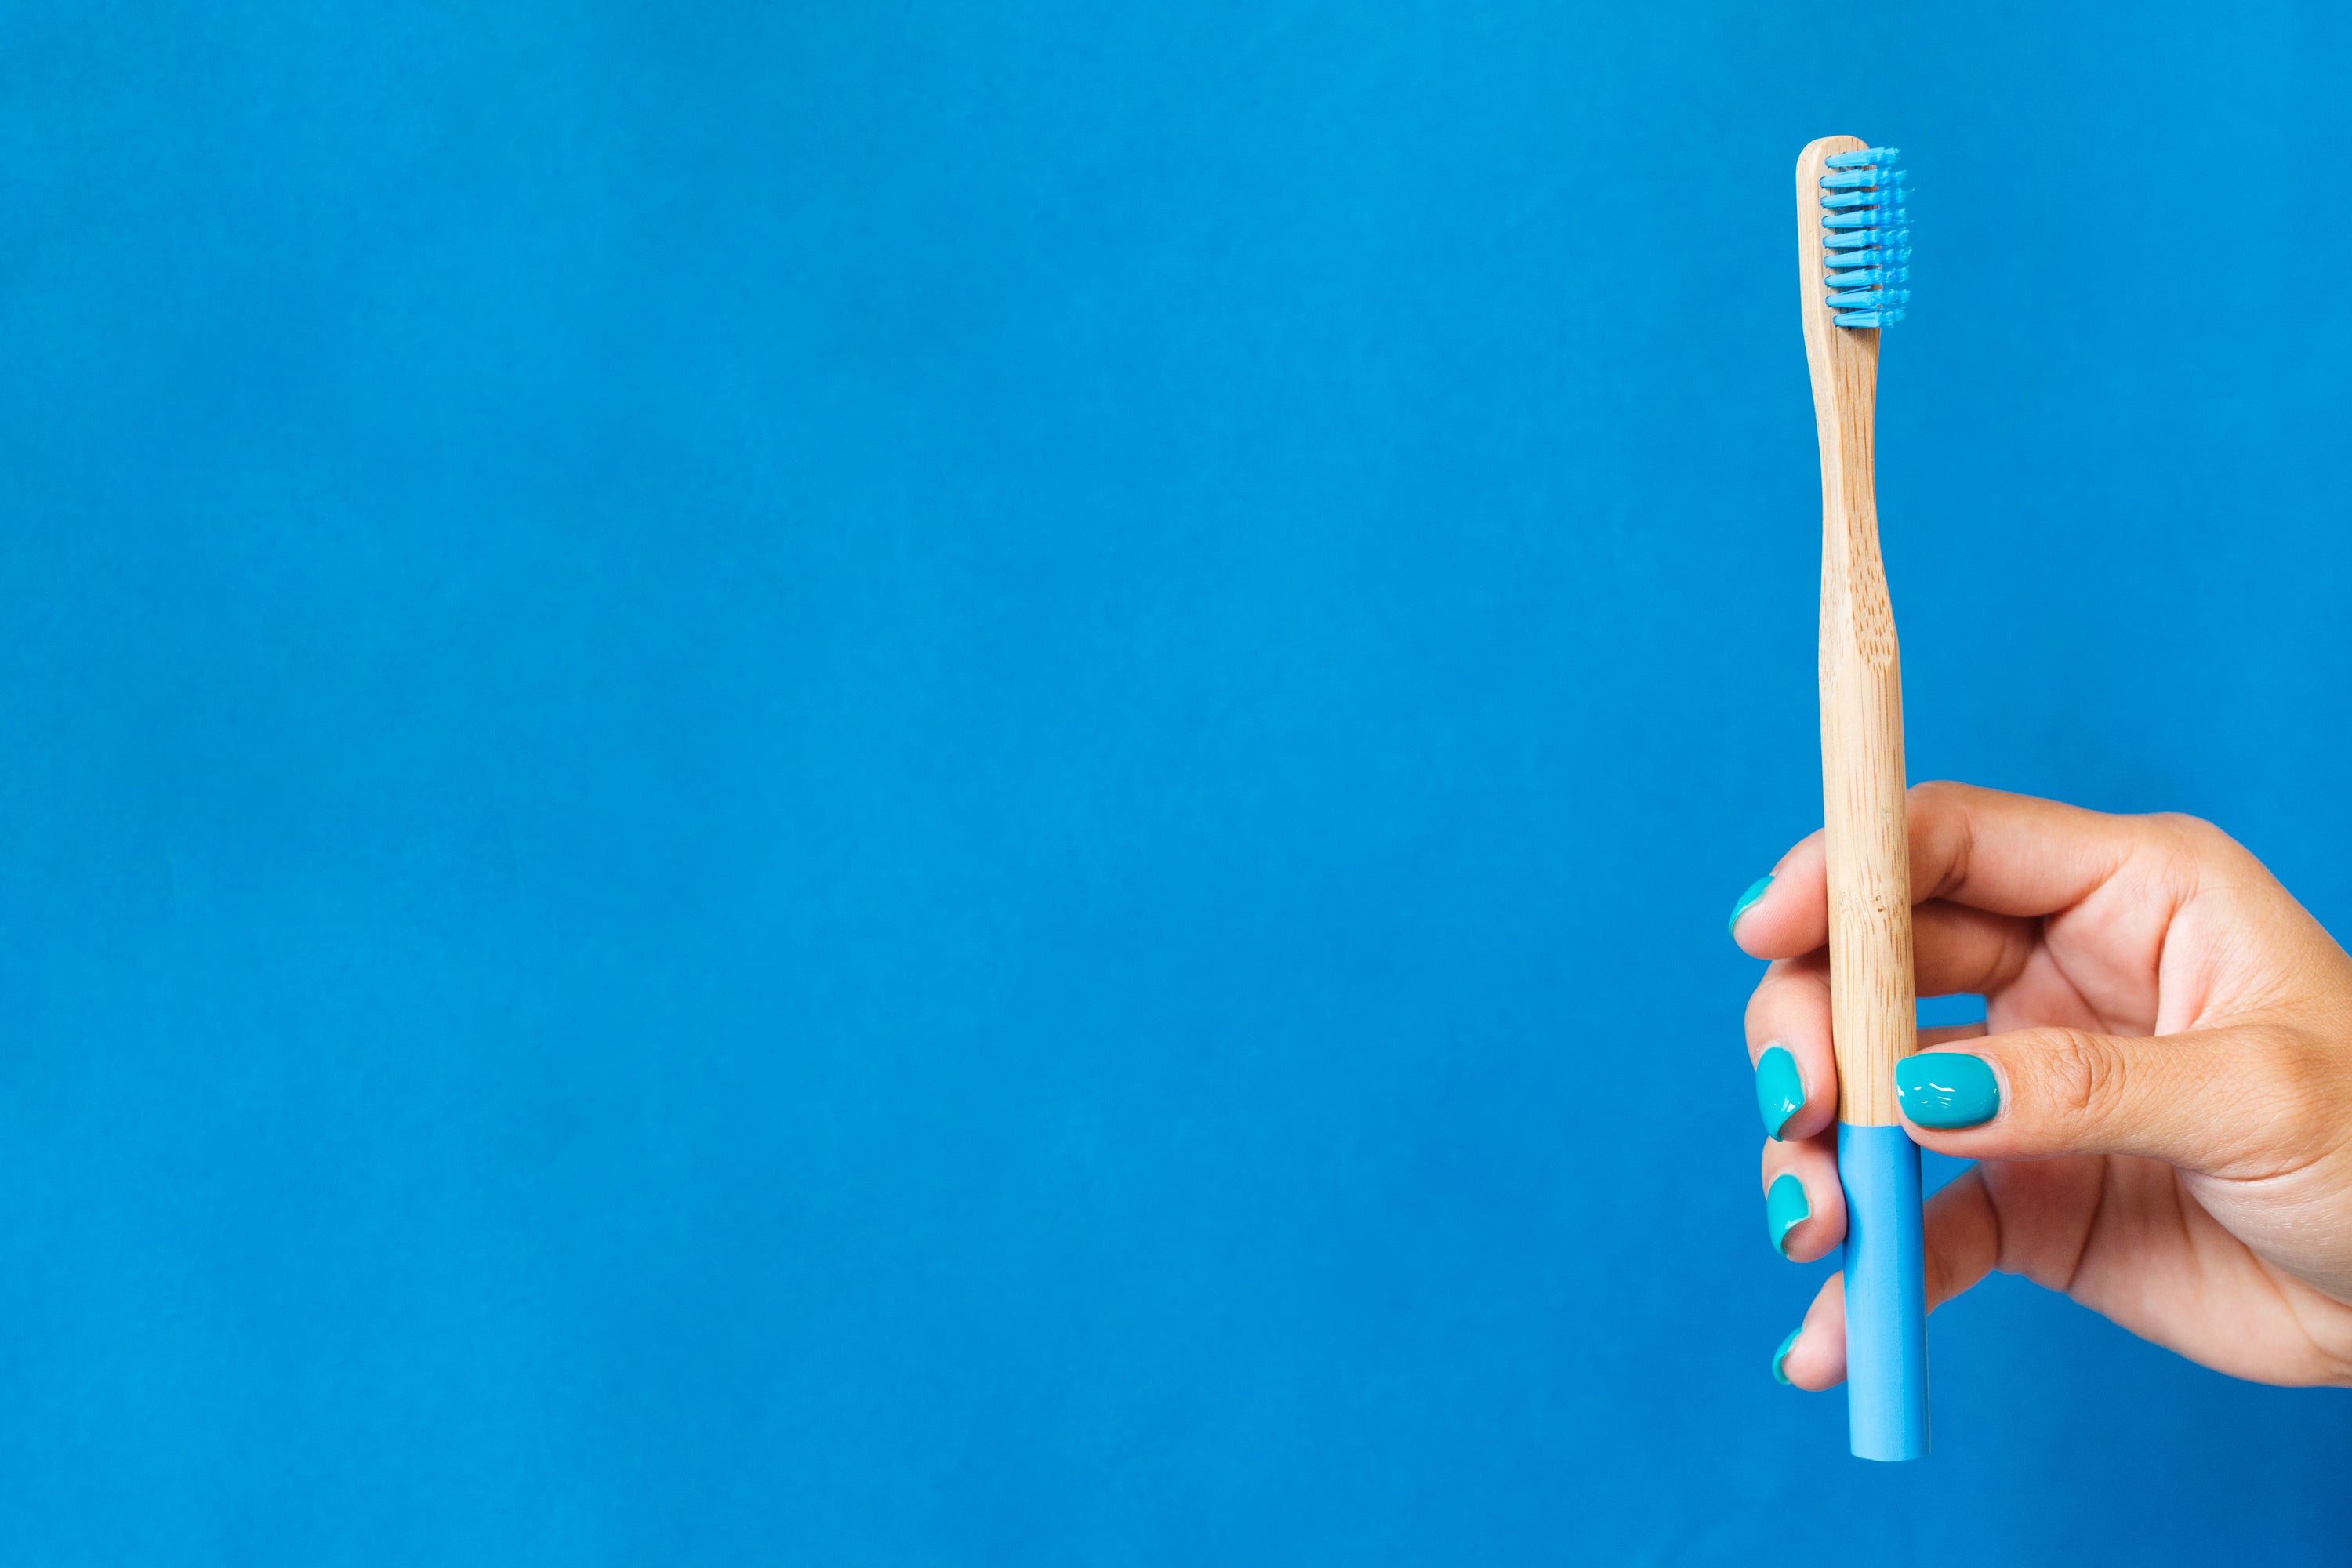 Purple Pizazz Bamboo Toothbrush (Medium Bristles) - truthpaste